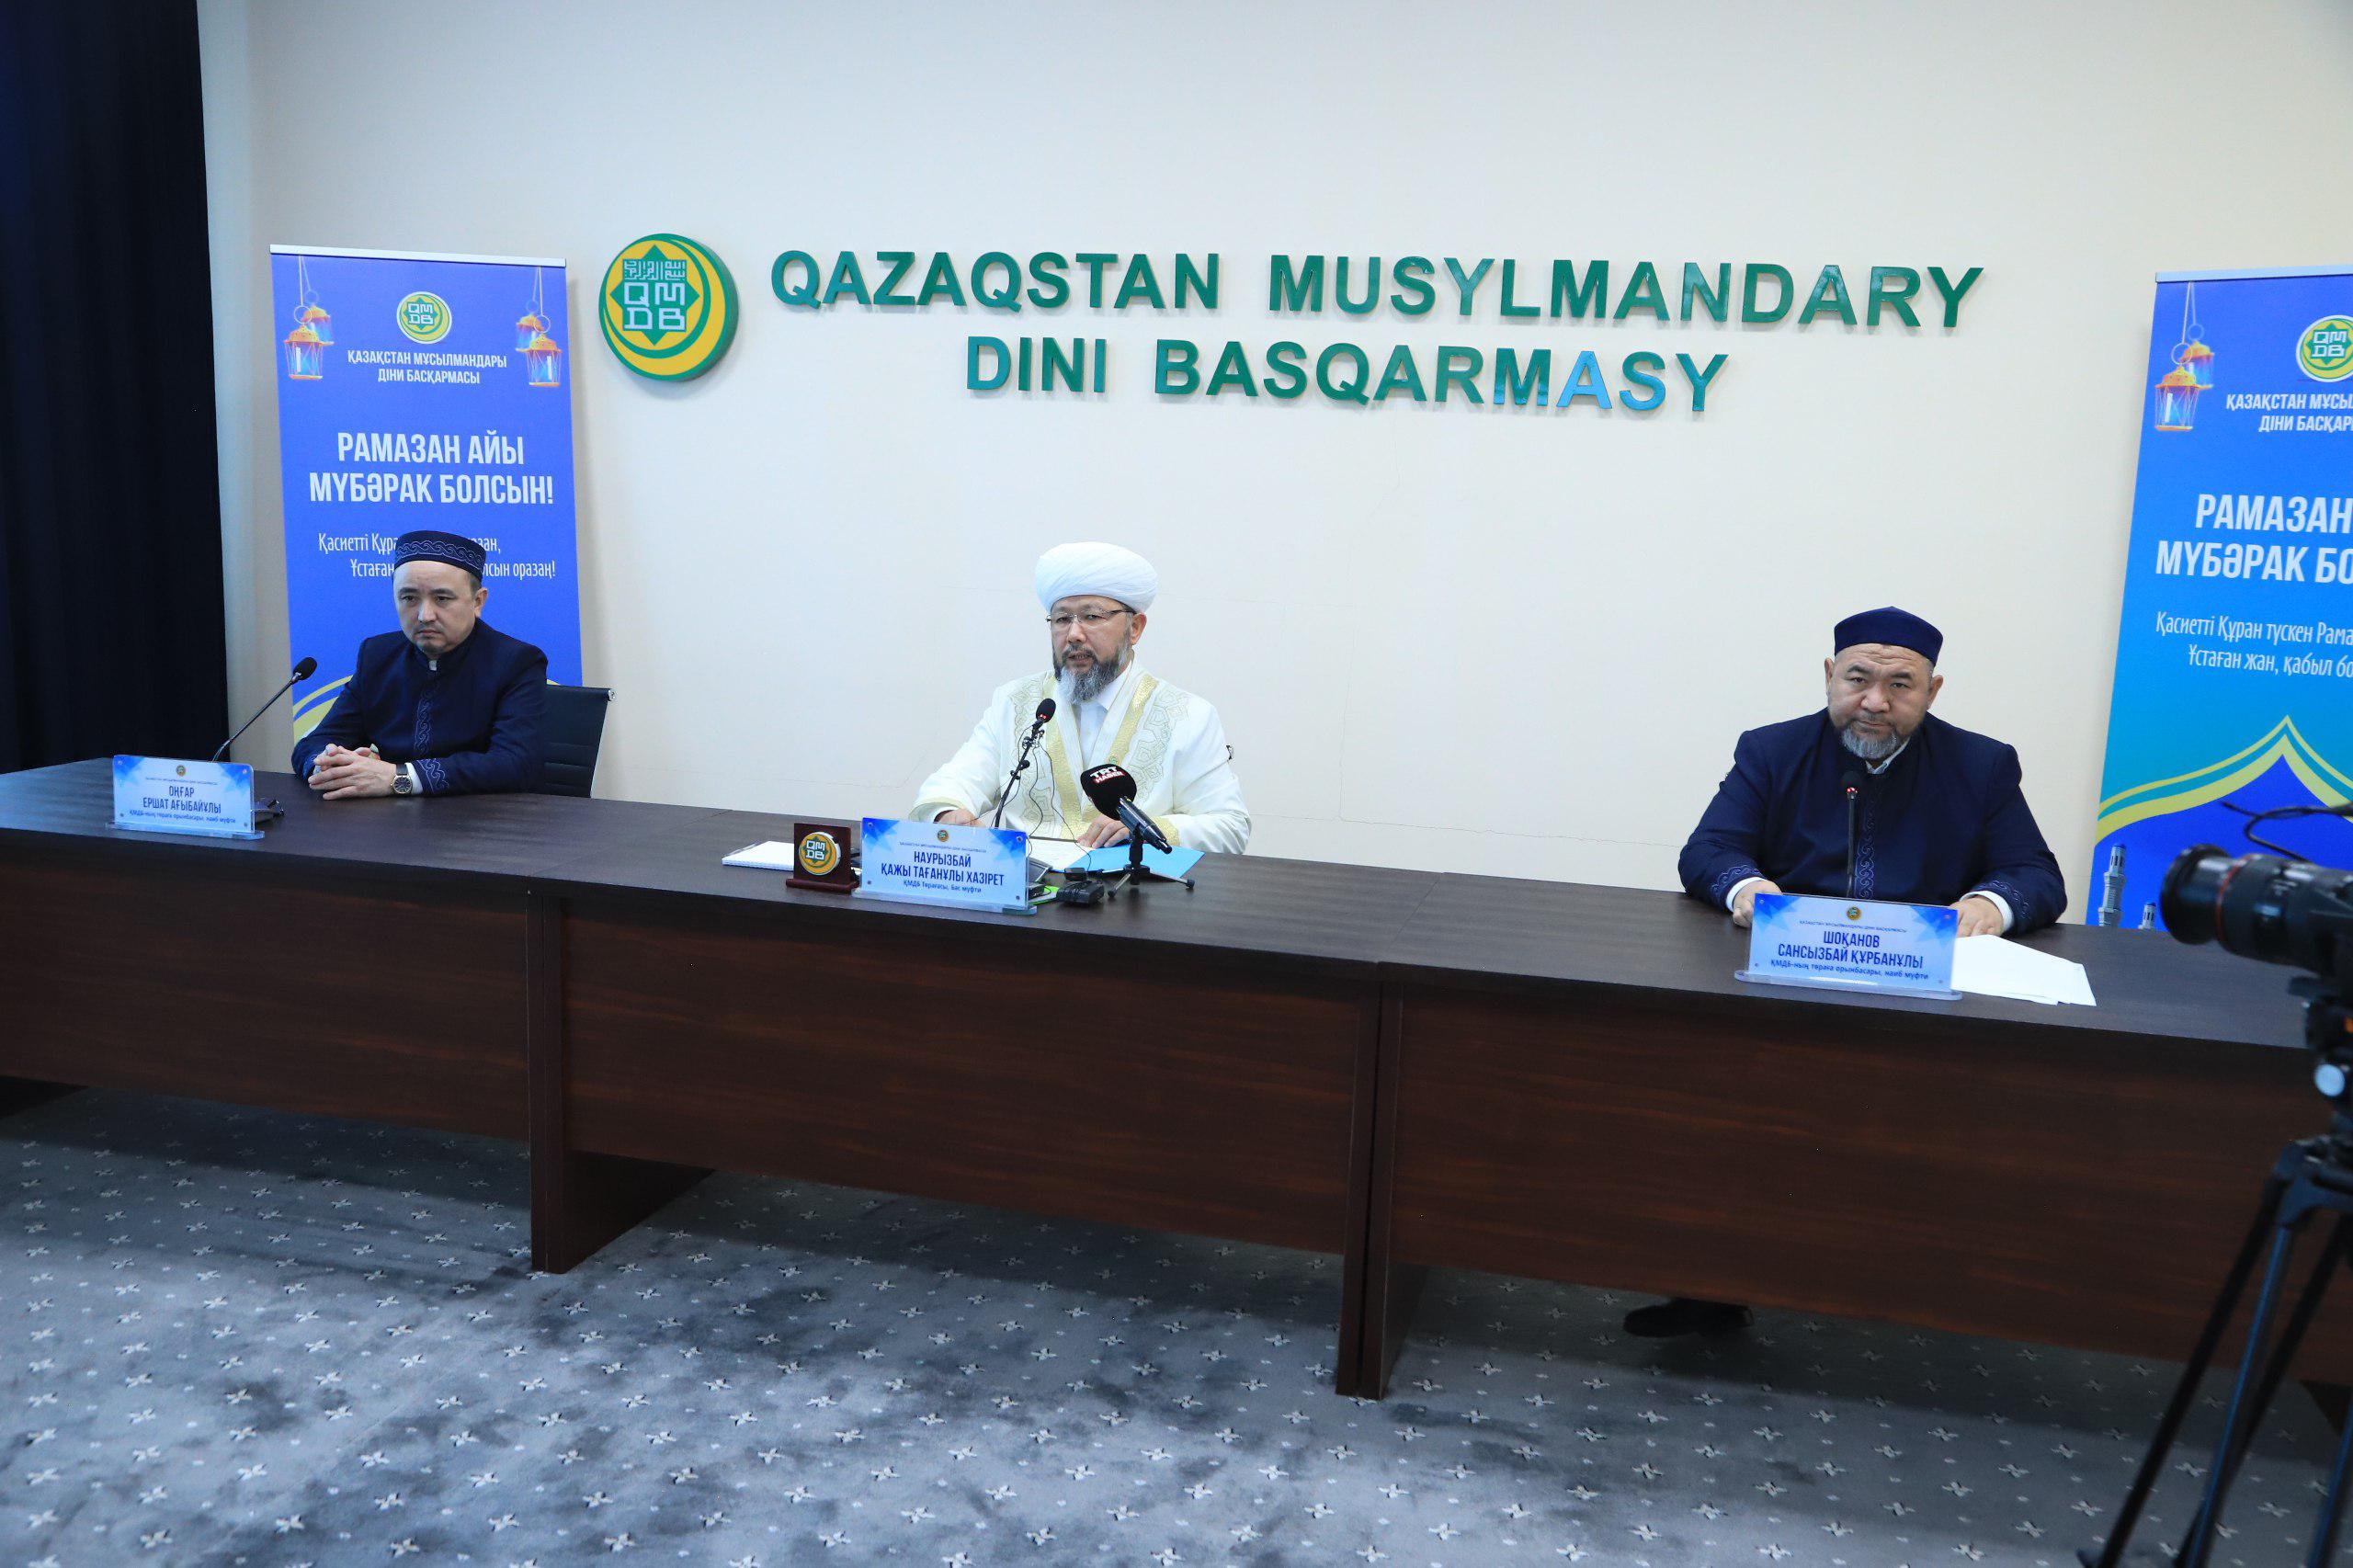 Начало рамадана в казахстане. Духовное управление мусульман. Муфтий Казахстана. Фото мусульман.